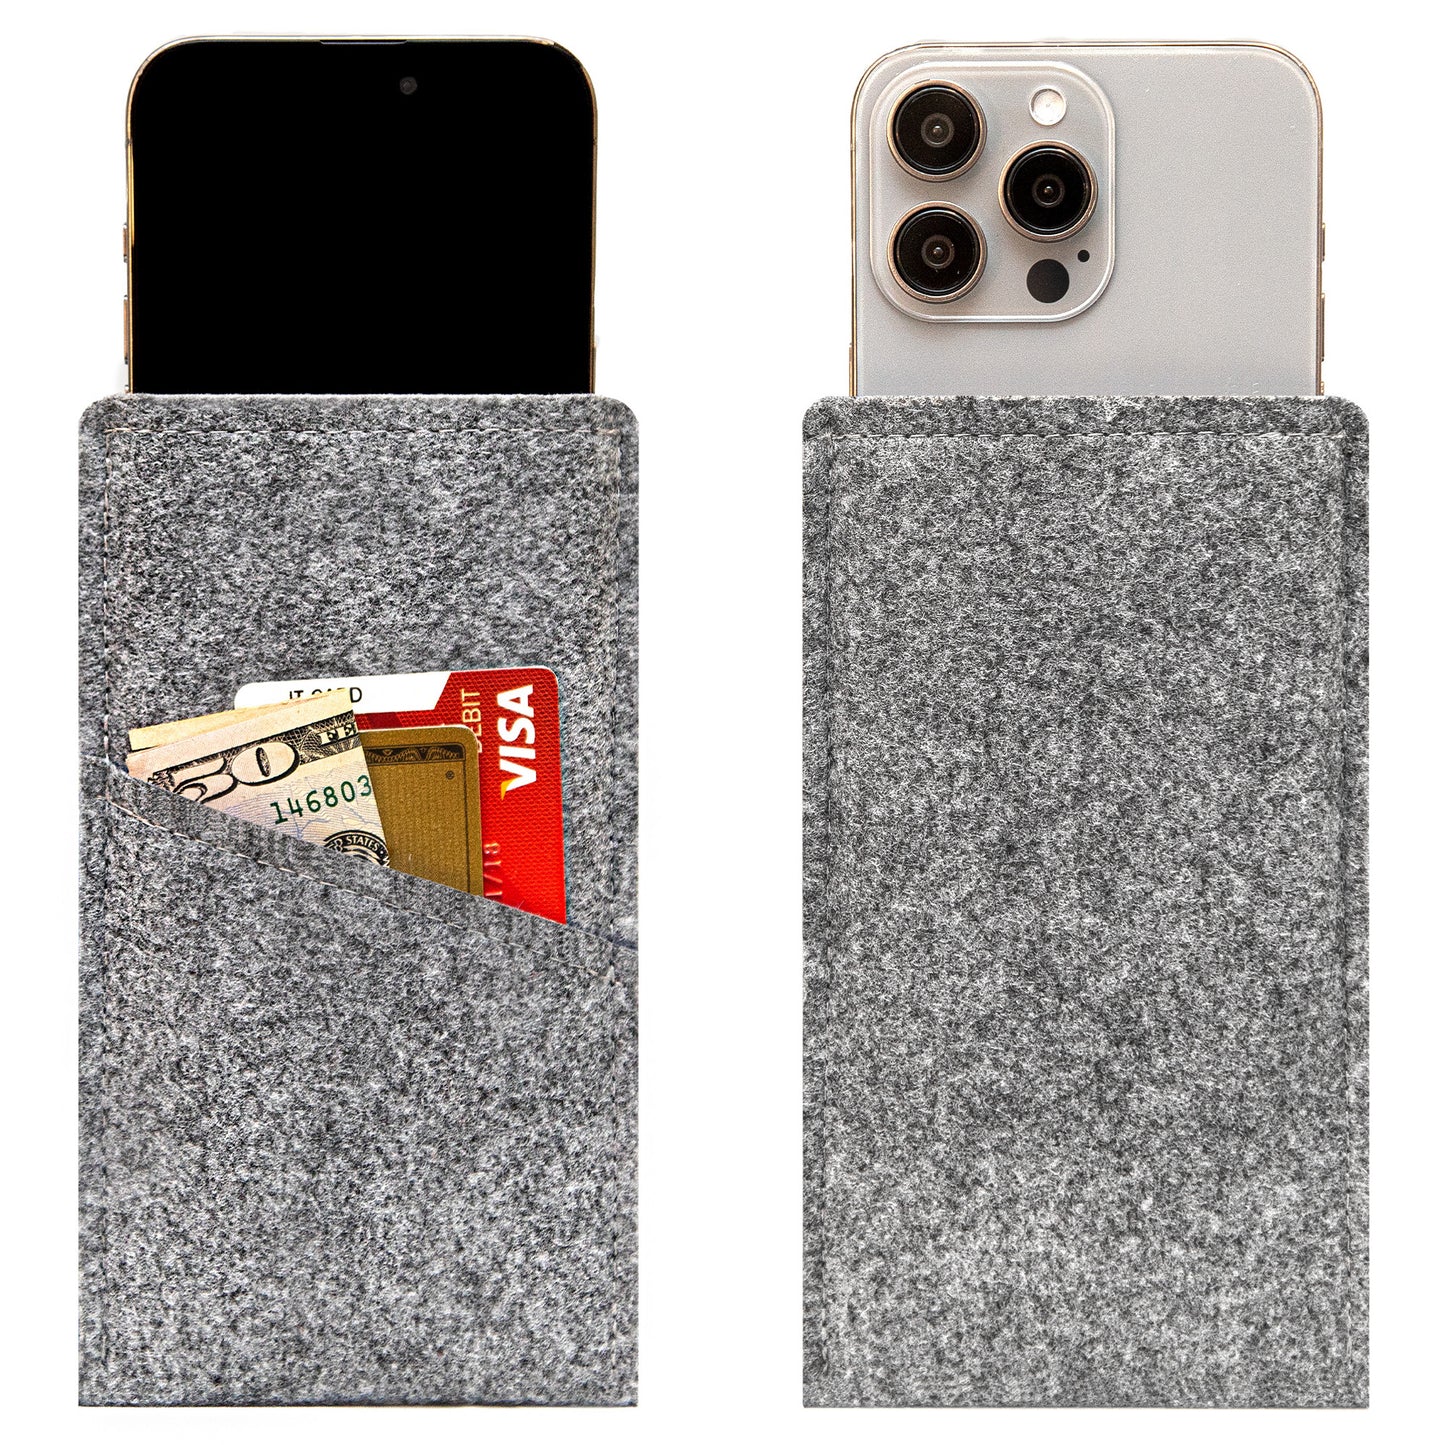 Premium Felt iPhone Sleeve with Card Pocket - Grey & Yellow